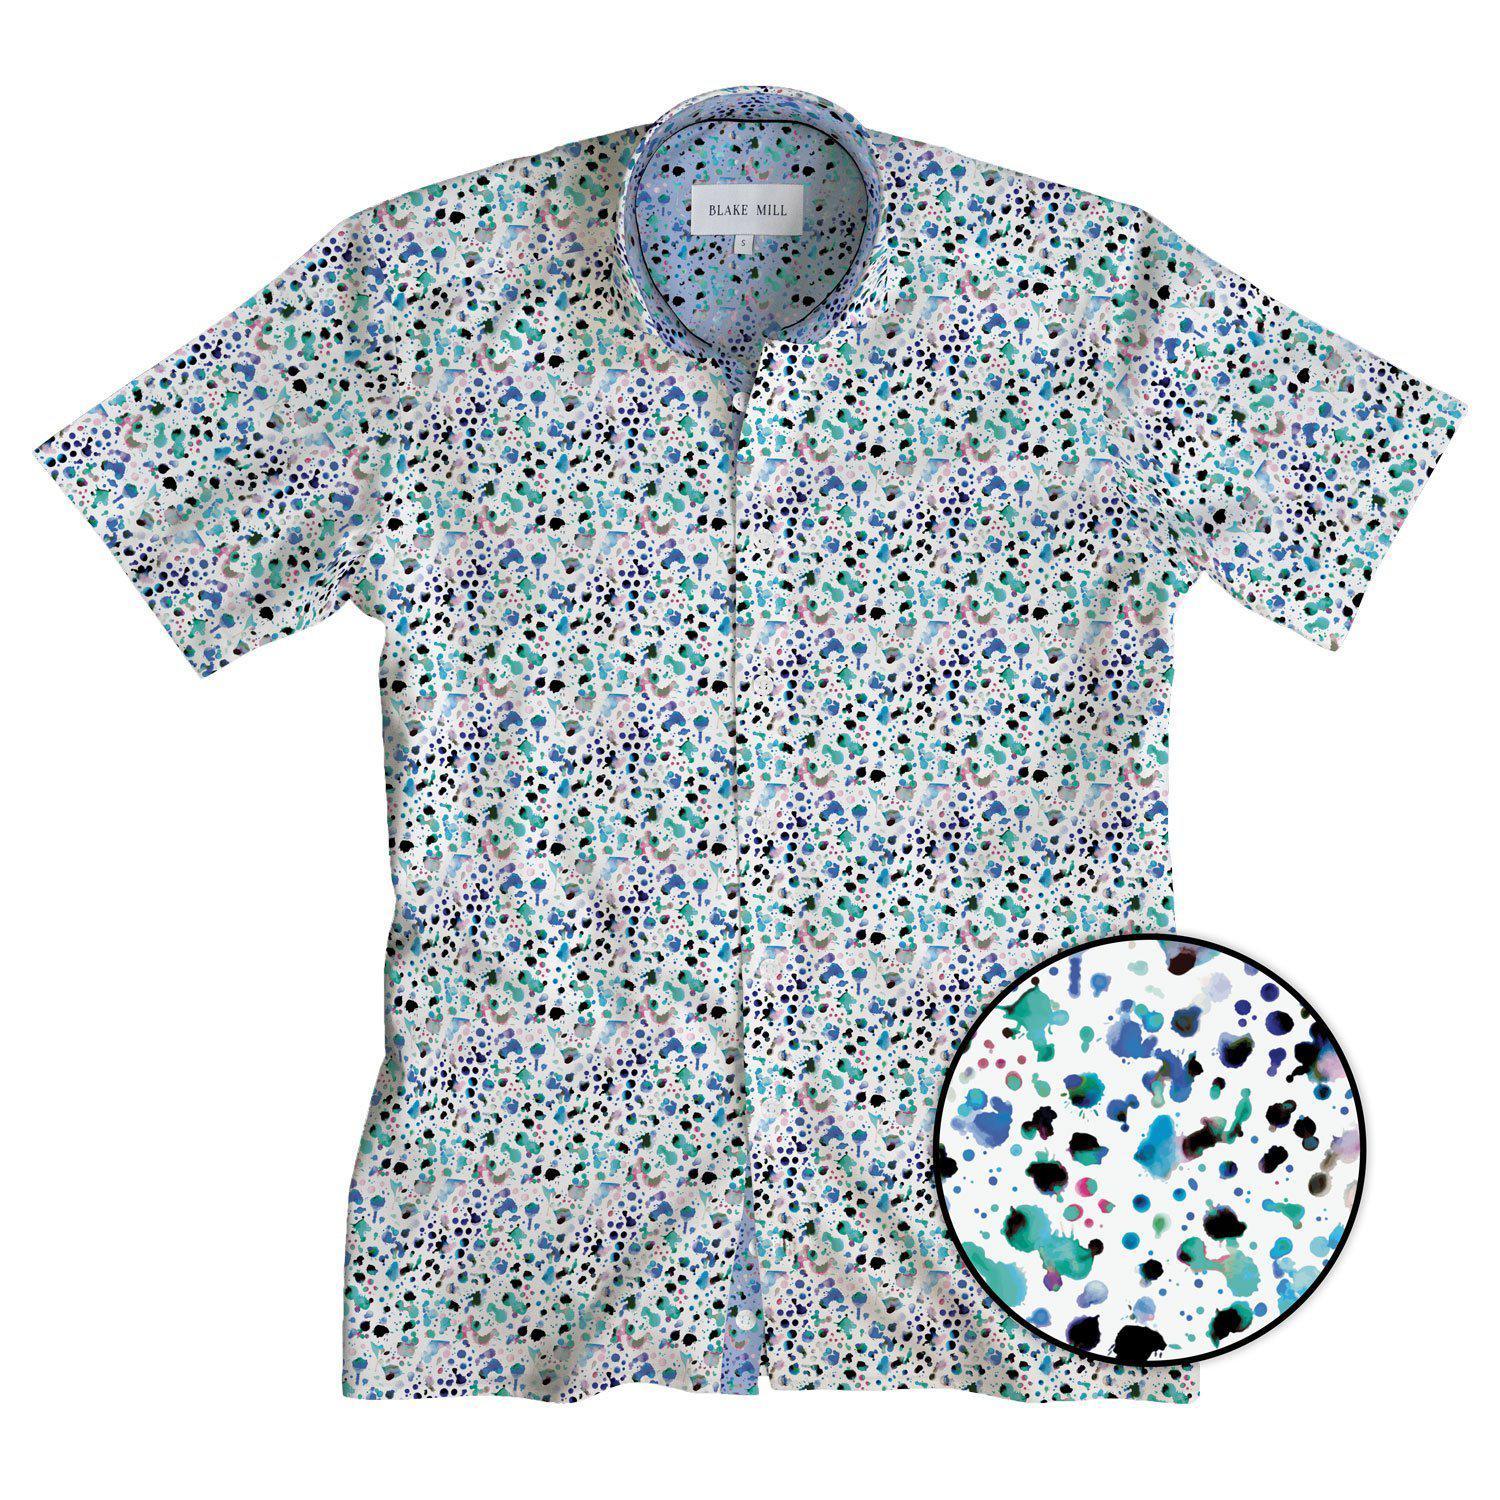 Watercolour Short Sleeve Shirt - Blake Mill